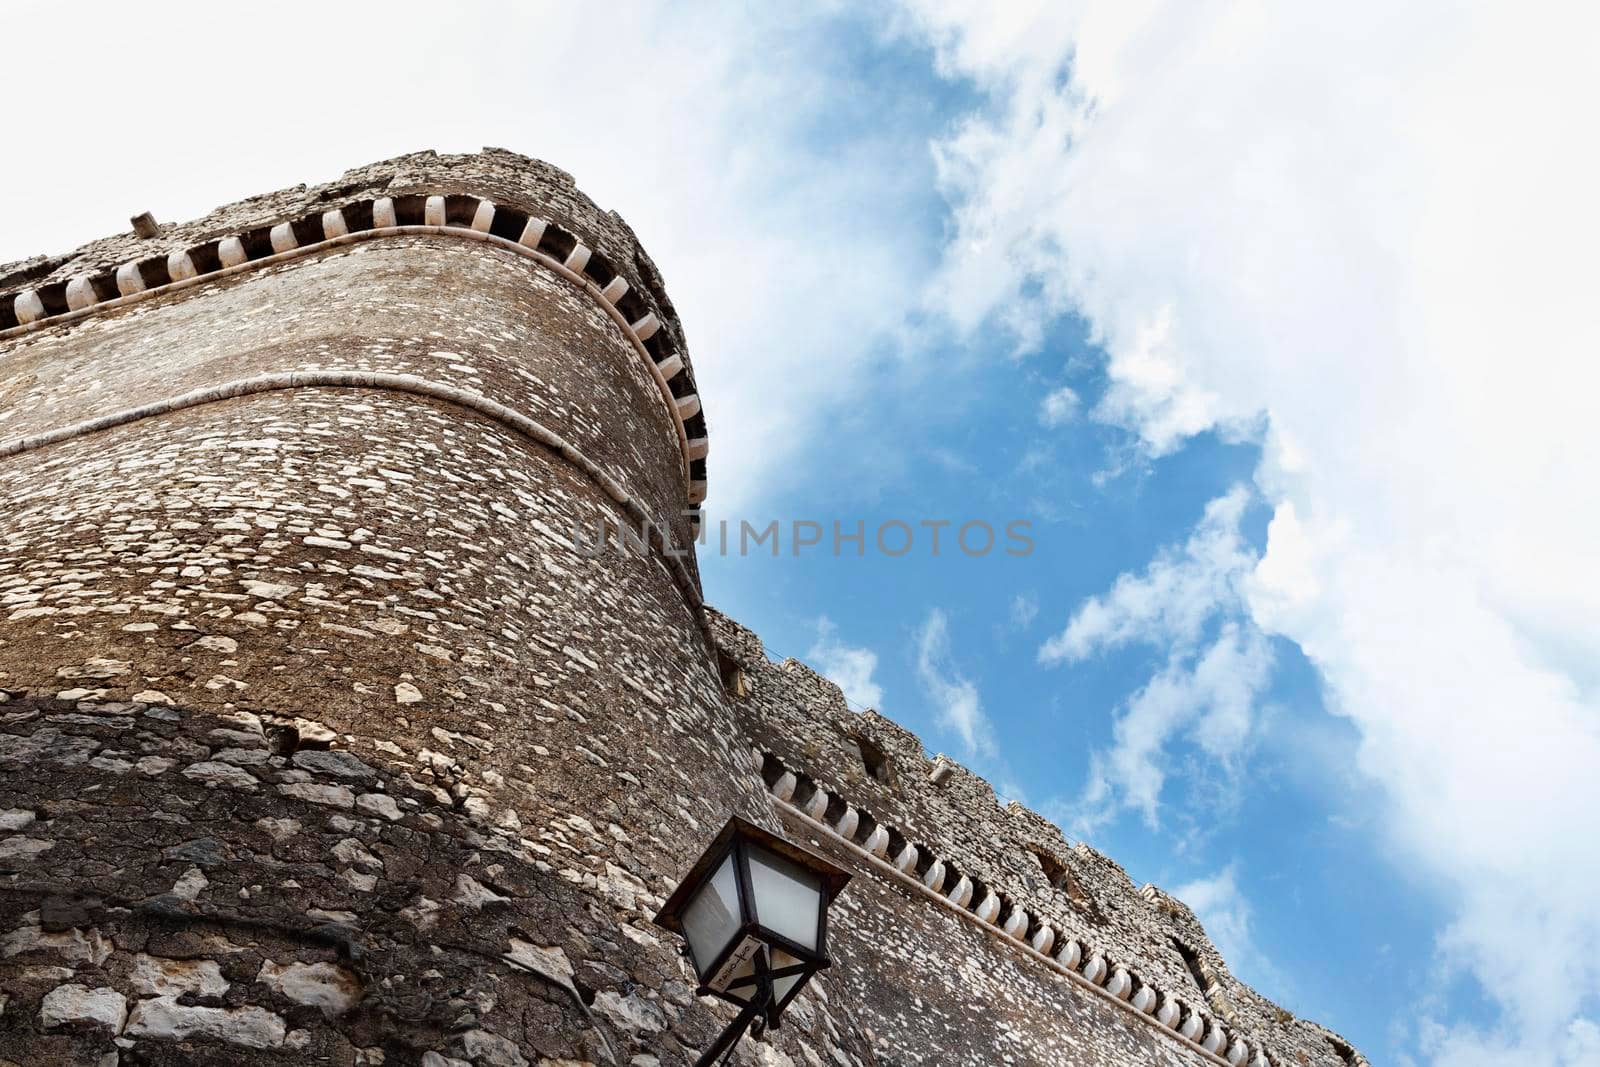 Sermoneta , Italy , 12 September  2021, Caetani castle in the medieval village of Sermoneta , stone walls and defensive tower 